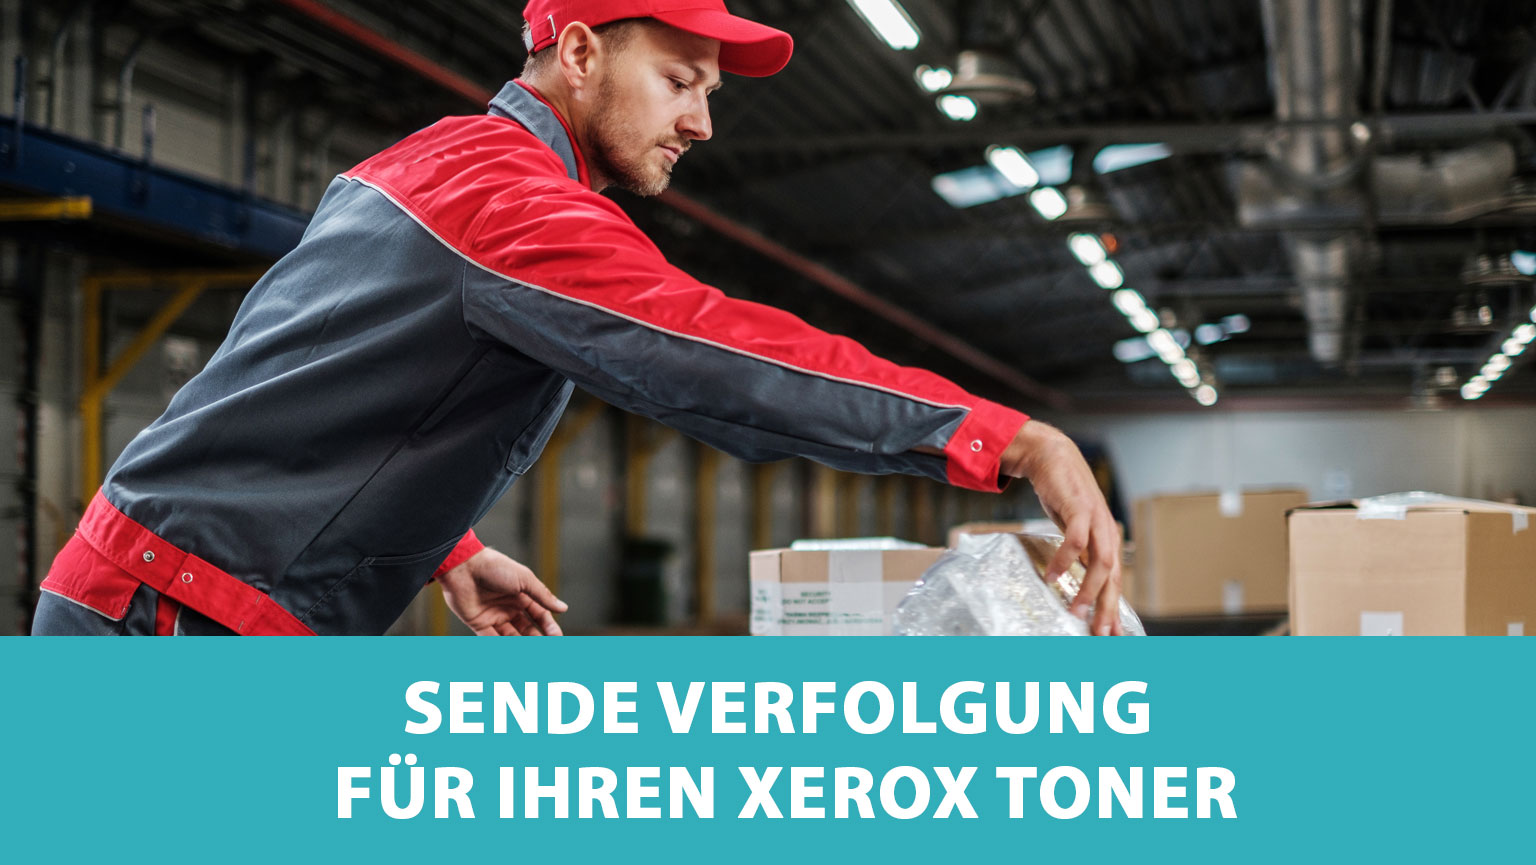 Xerox Toner, Track and Trace, Sendeverfolgung